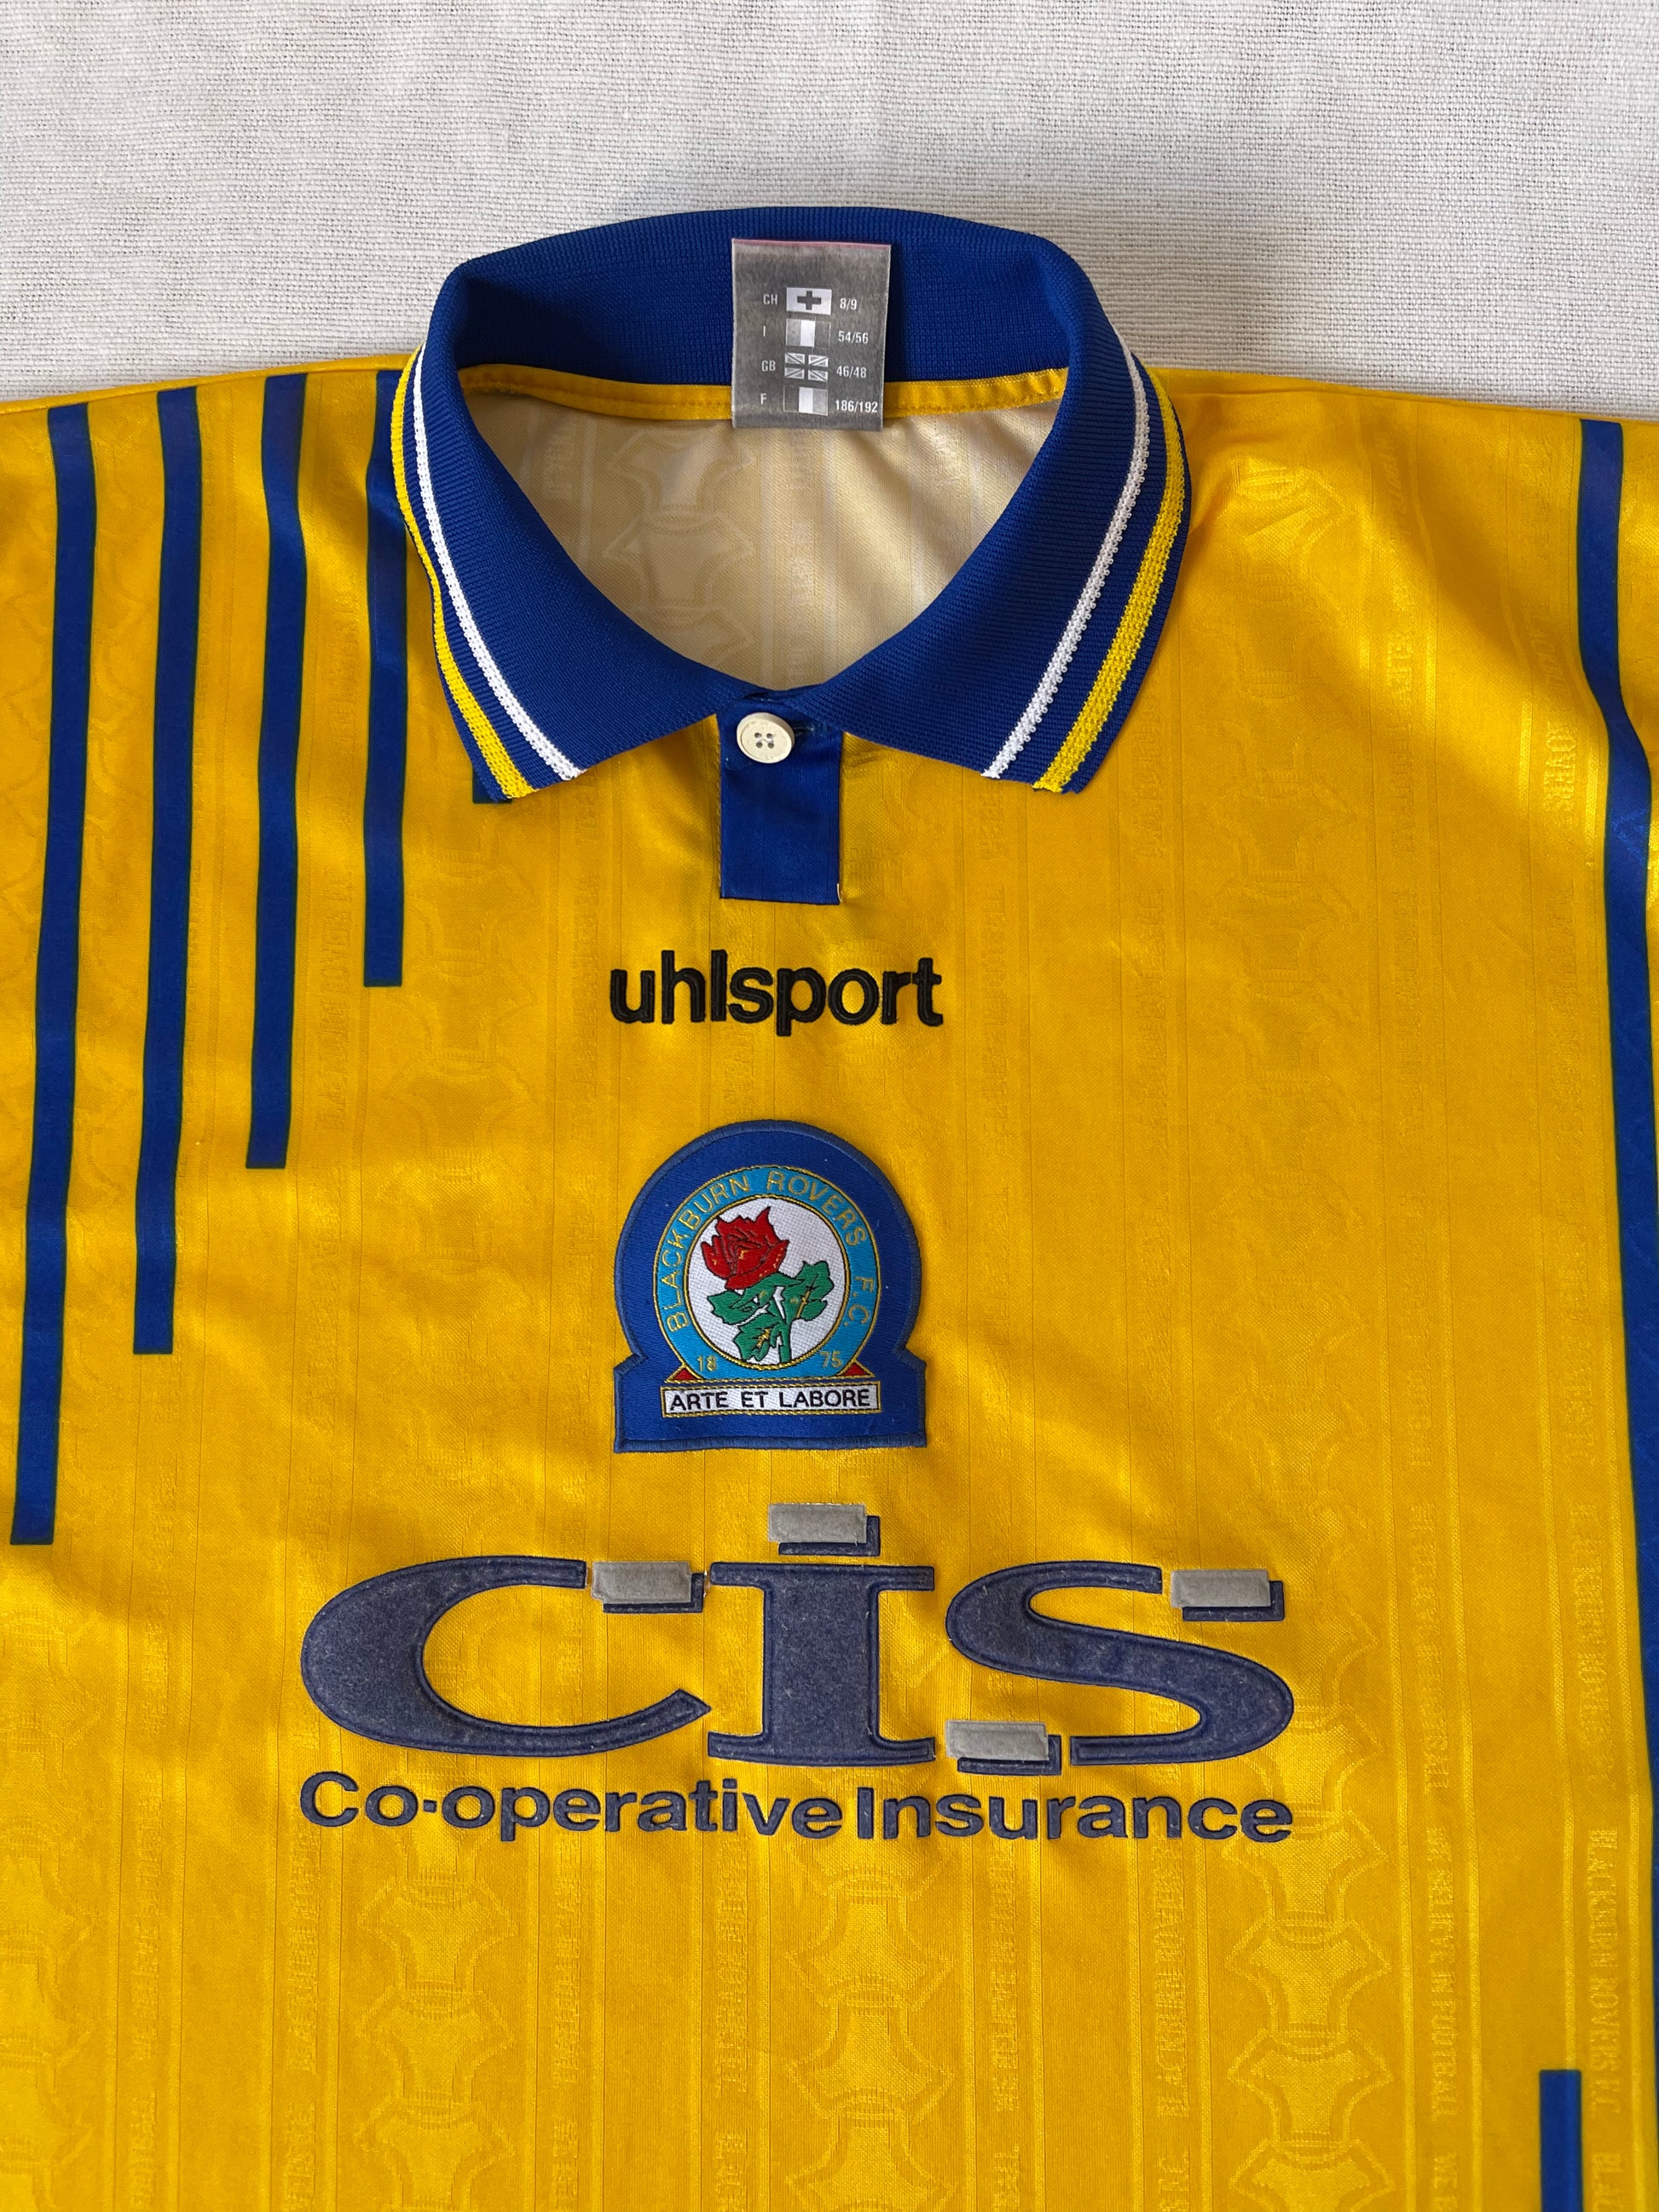 Blackburn Rovers FC 1998-1999 Uhlsport Away Football Shirt Size XL CIS Yellow